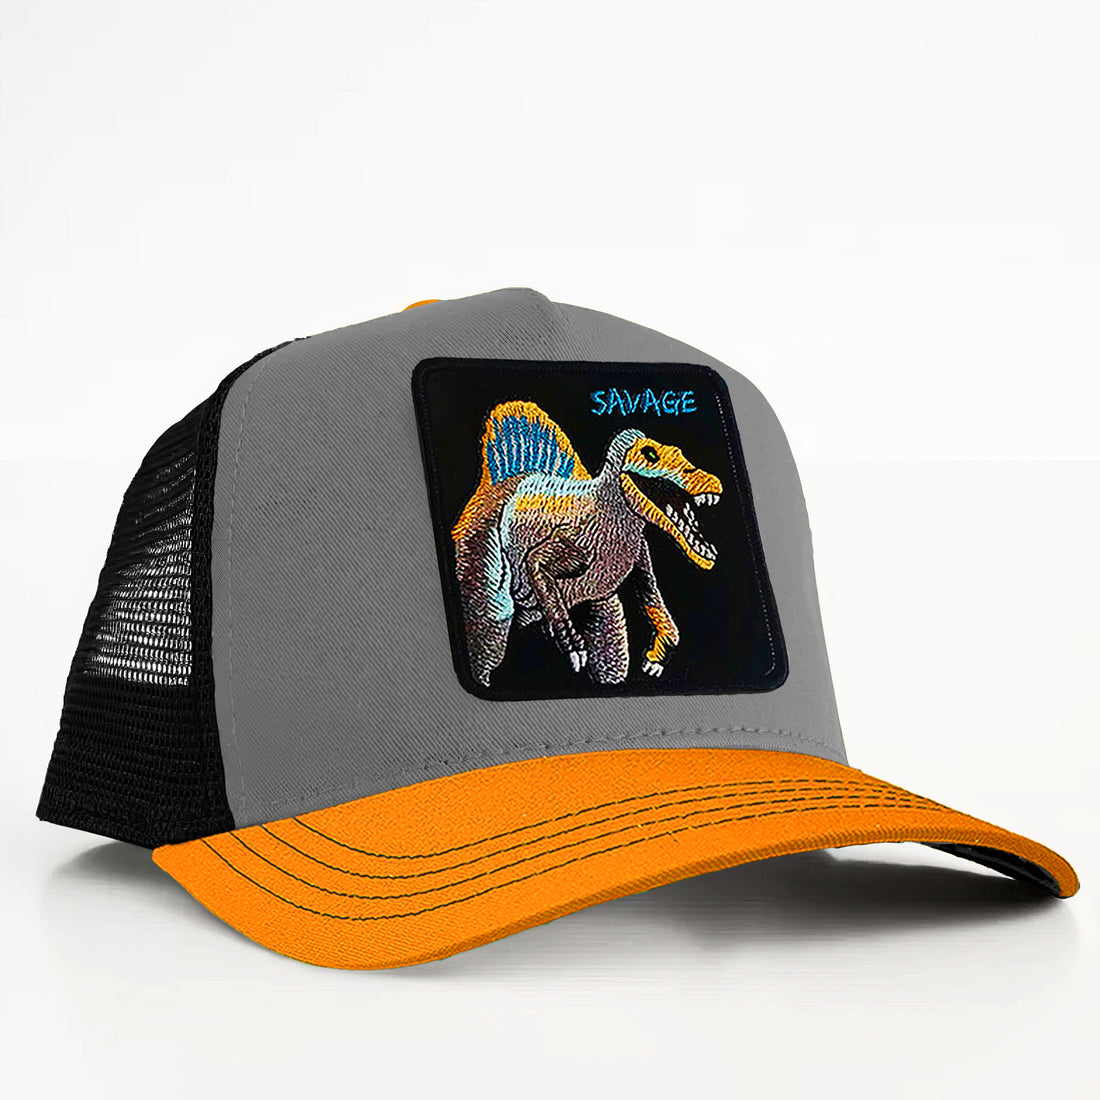 Spinosaurus - "Savage" Trucker Hat